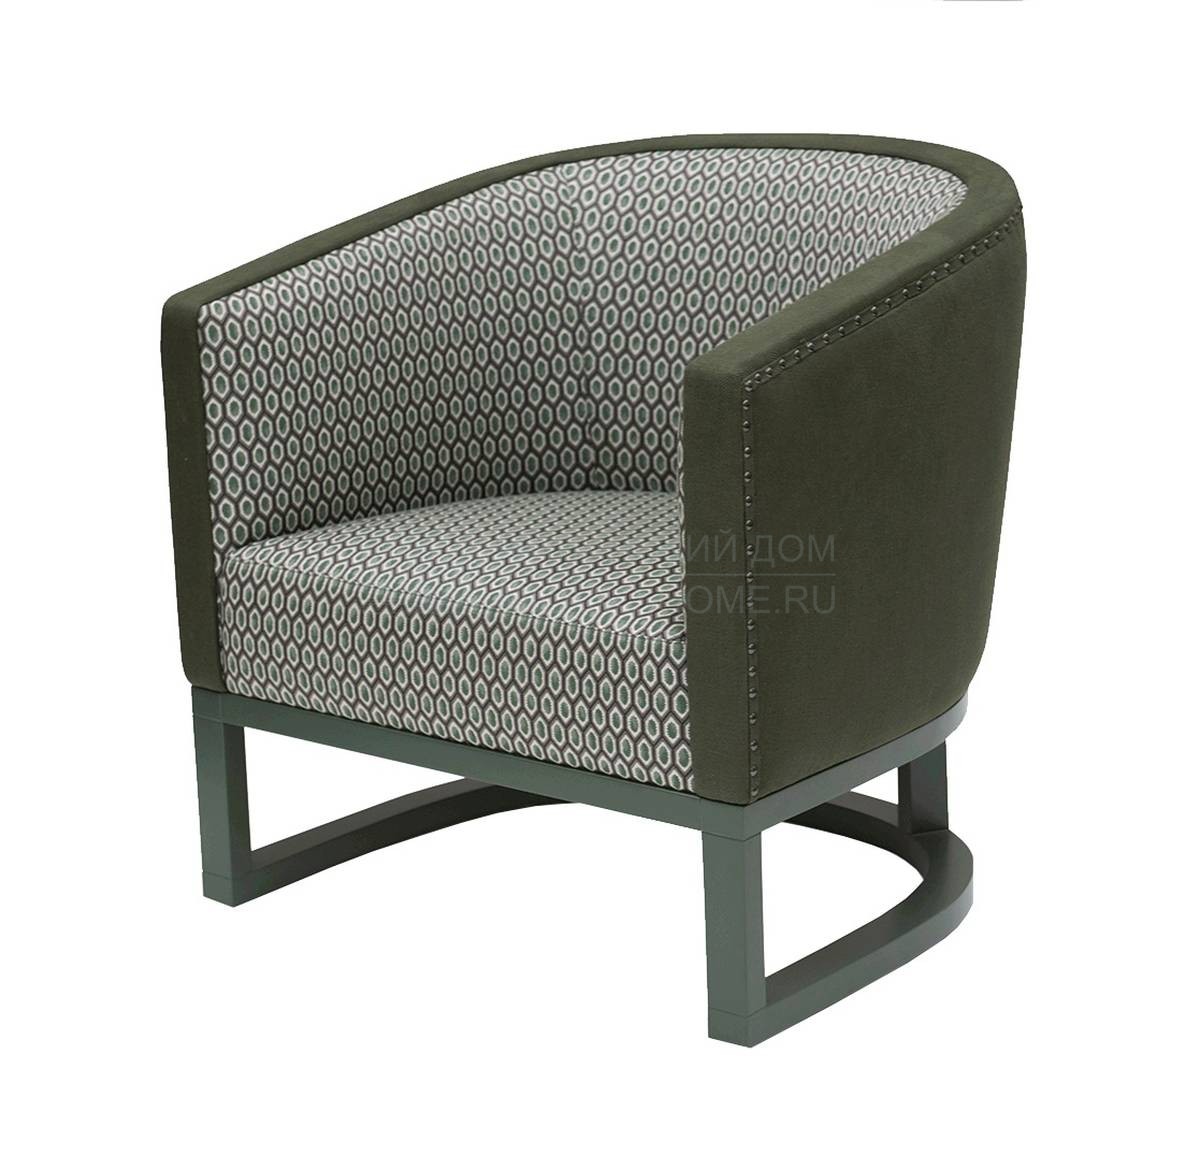 Круглое кресло Linz armchair из Португалии фабрики FRATO